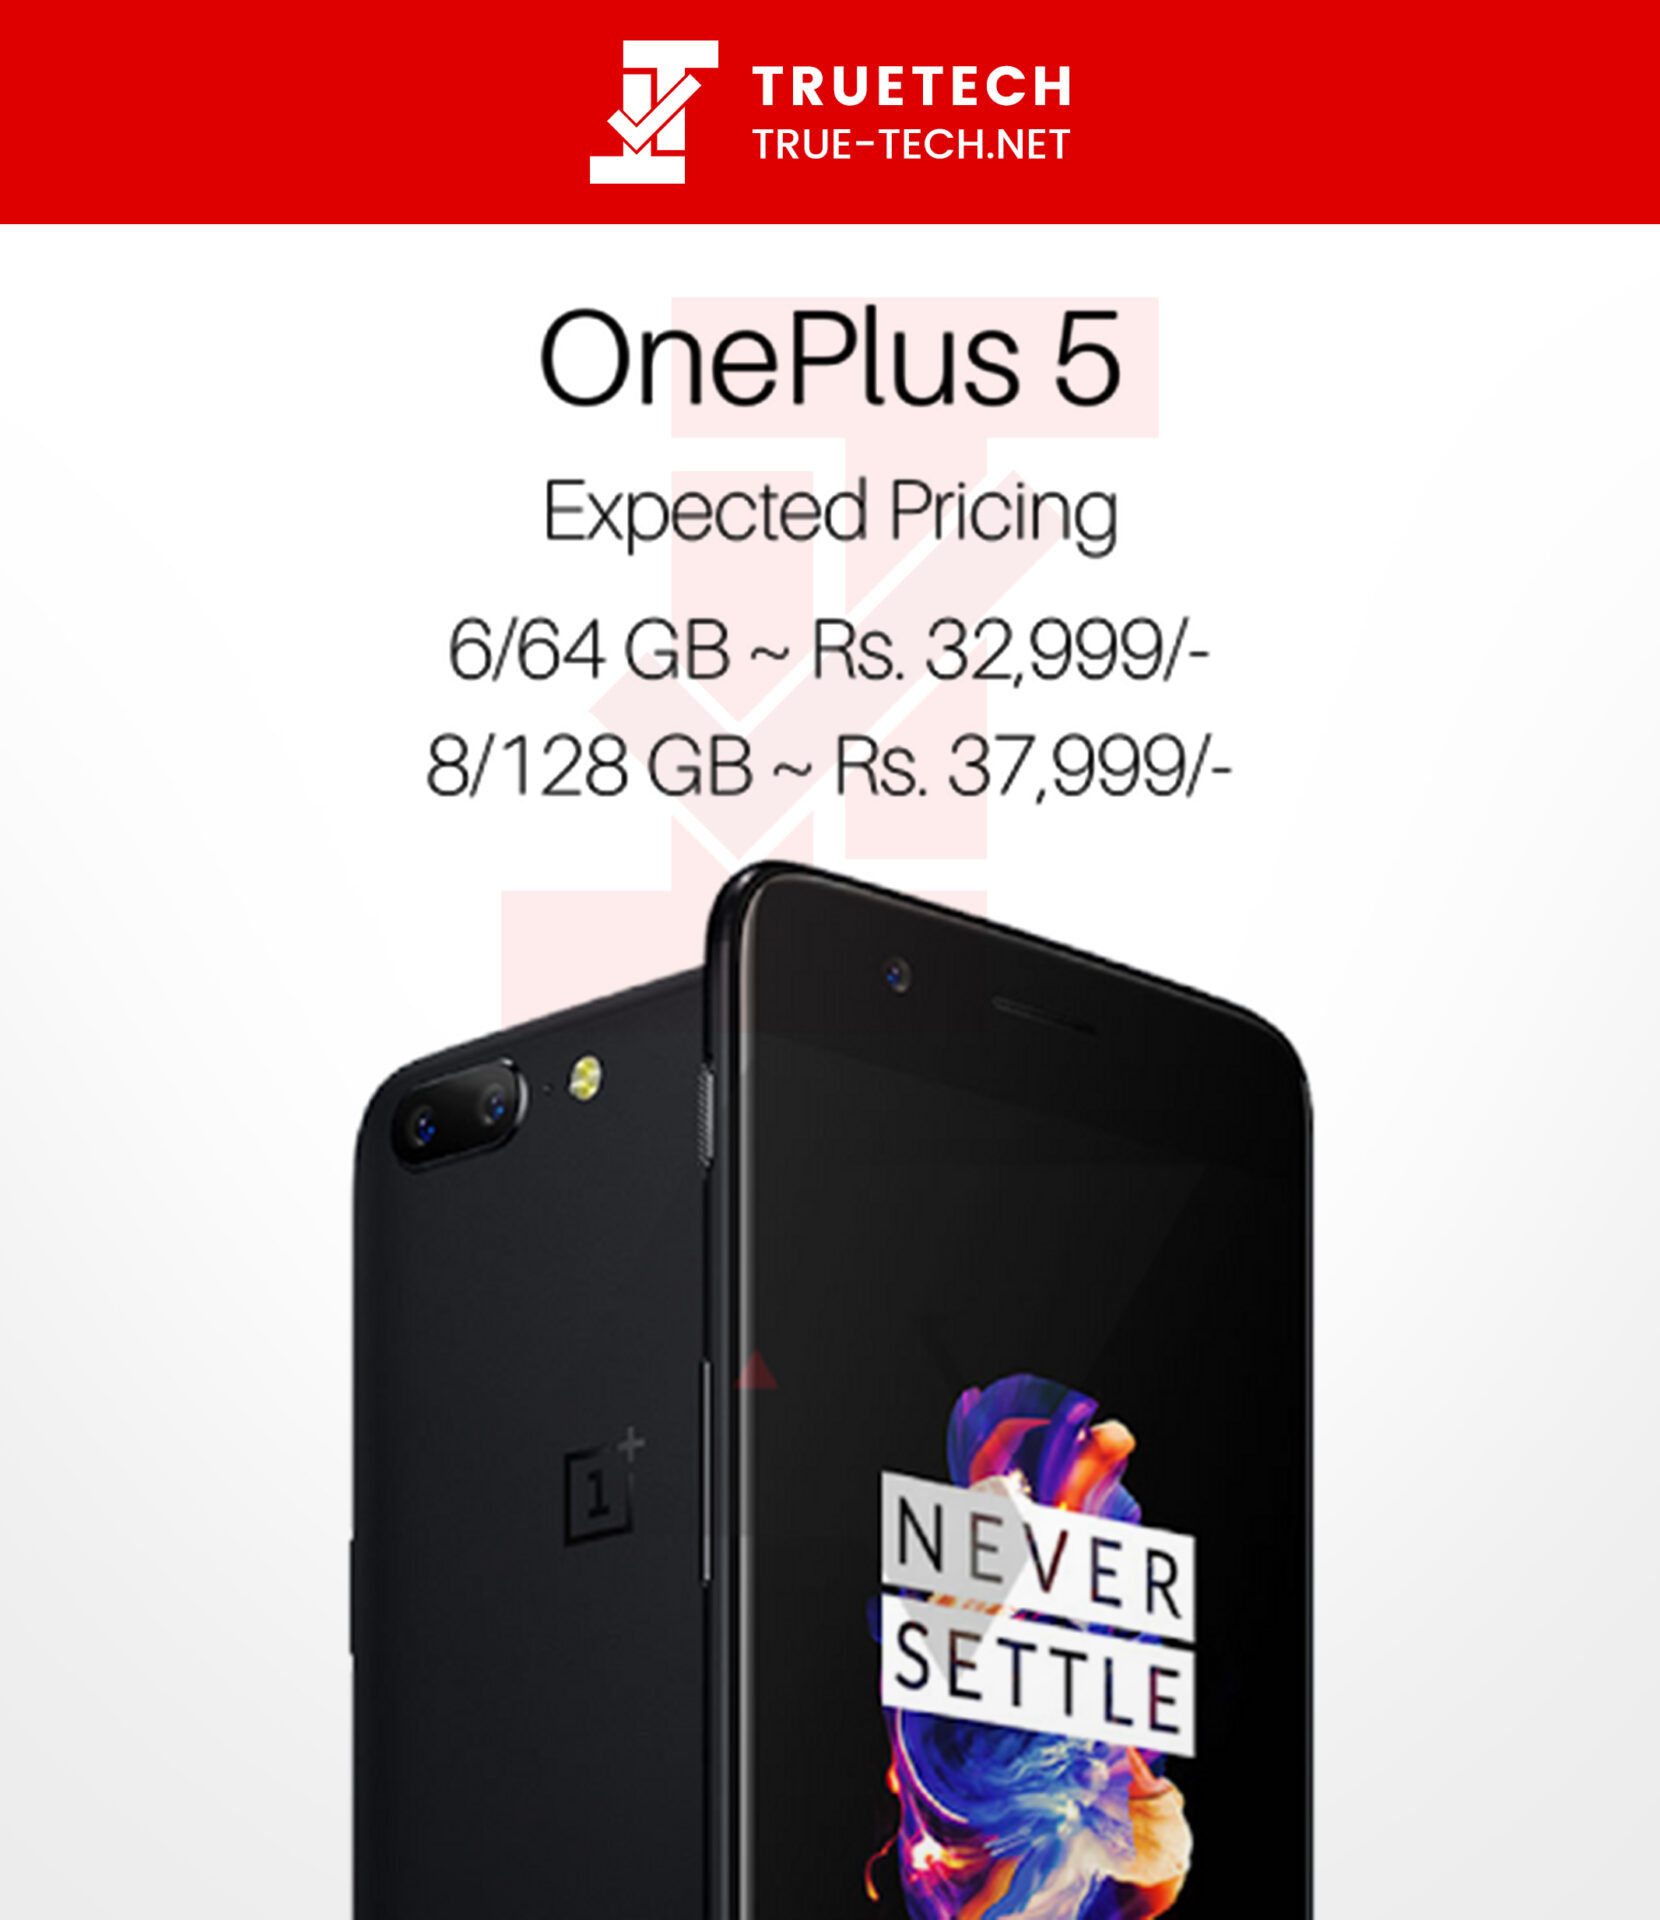 Truetech Final Poster Oneplus 5 Pricing – Exclusive: Oneplus 5 Pricing Expected To Start At Rs. 32,999 | Truetech